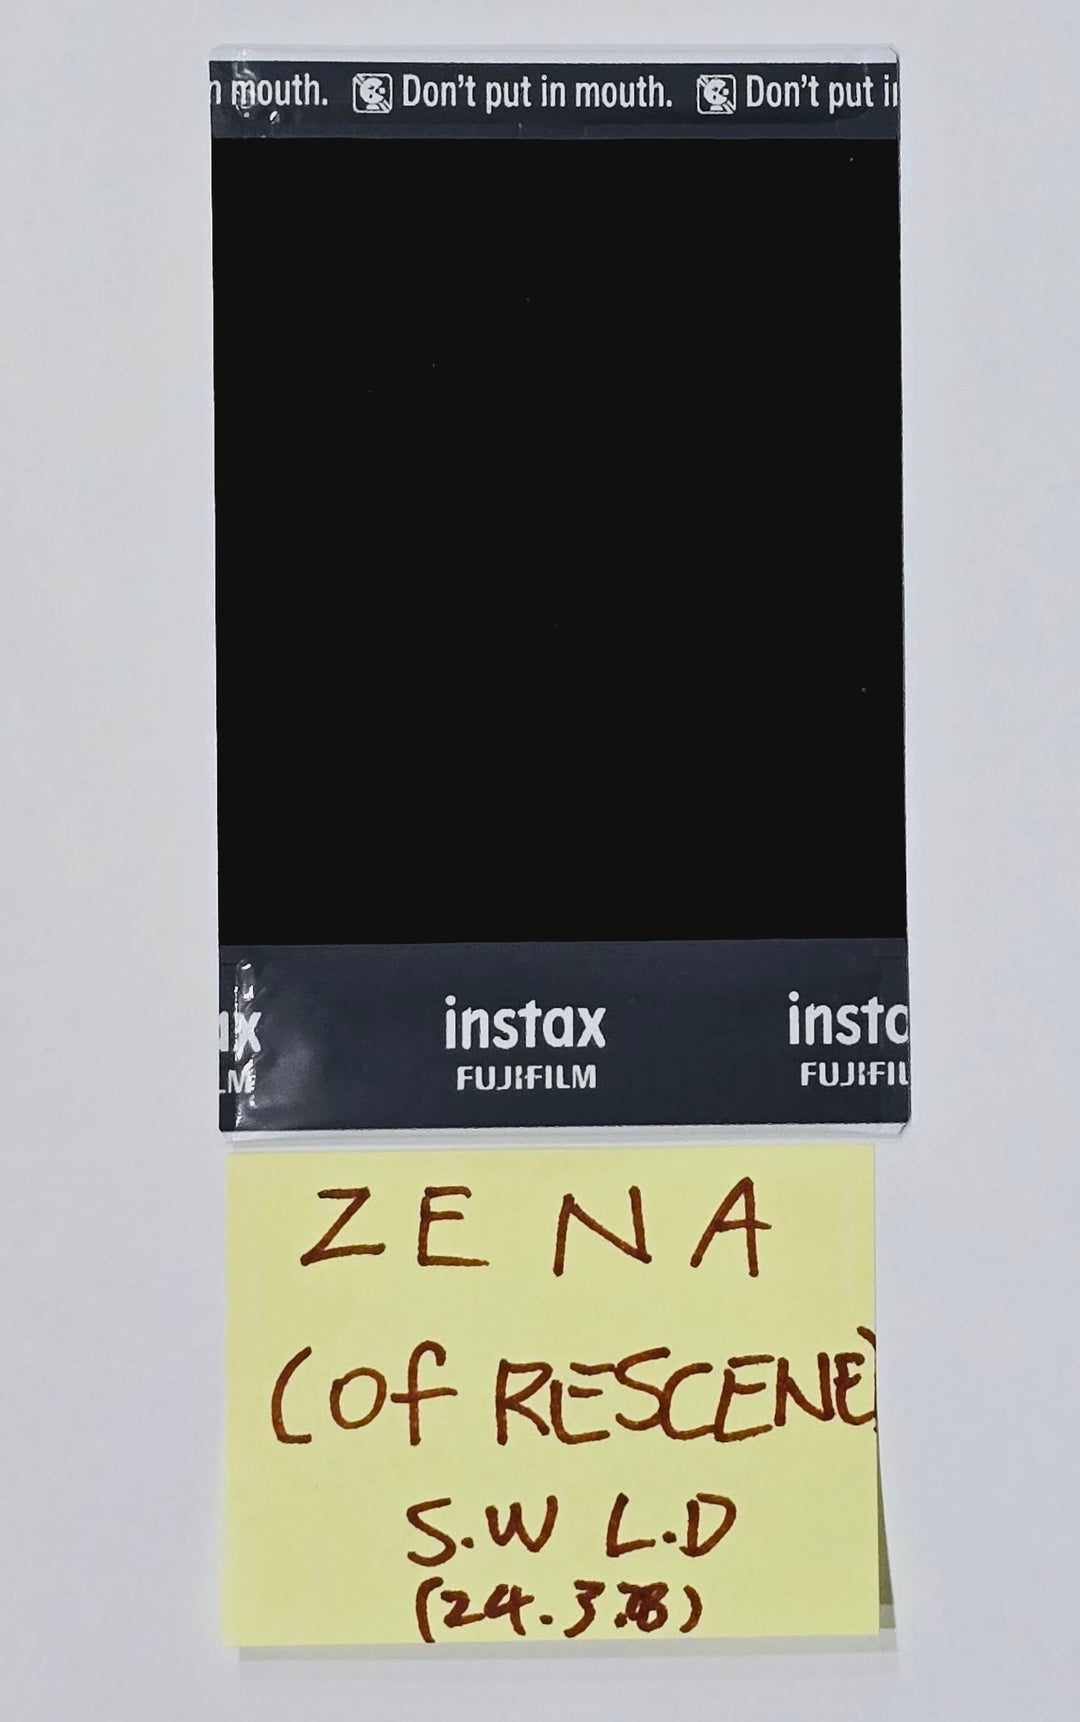 ZENA (Of RESCENE) 'Re:Scene'  - Hand Autographed(Signed) Polaroid [24.3.28]